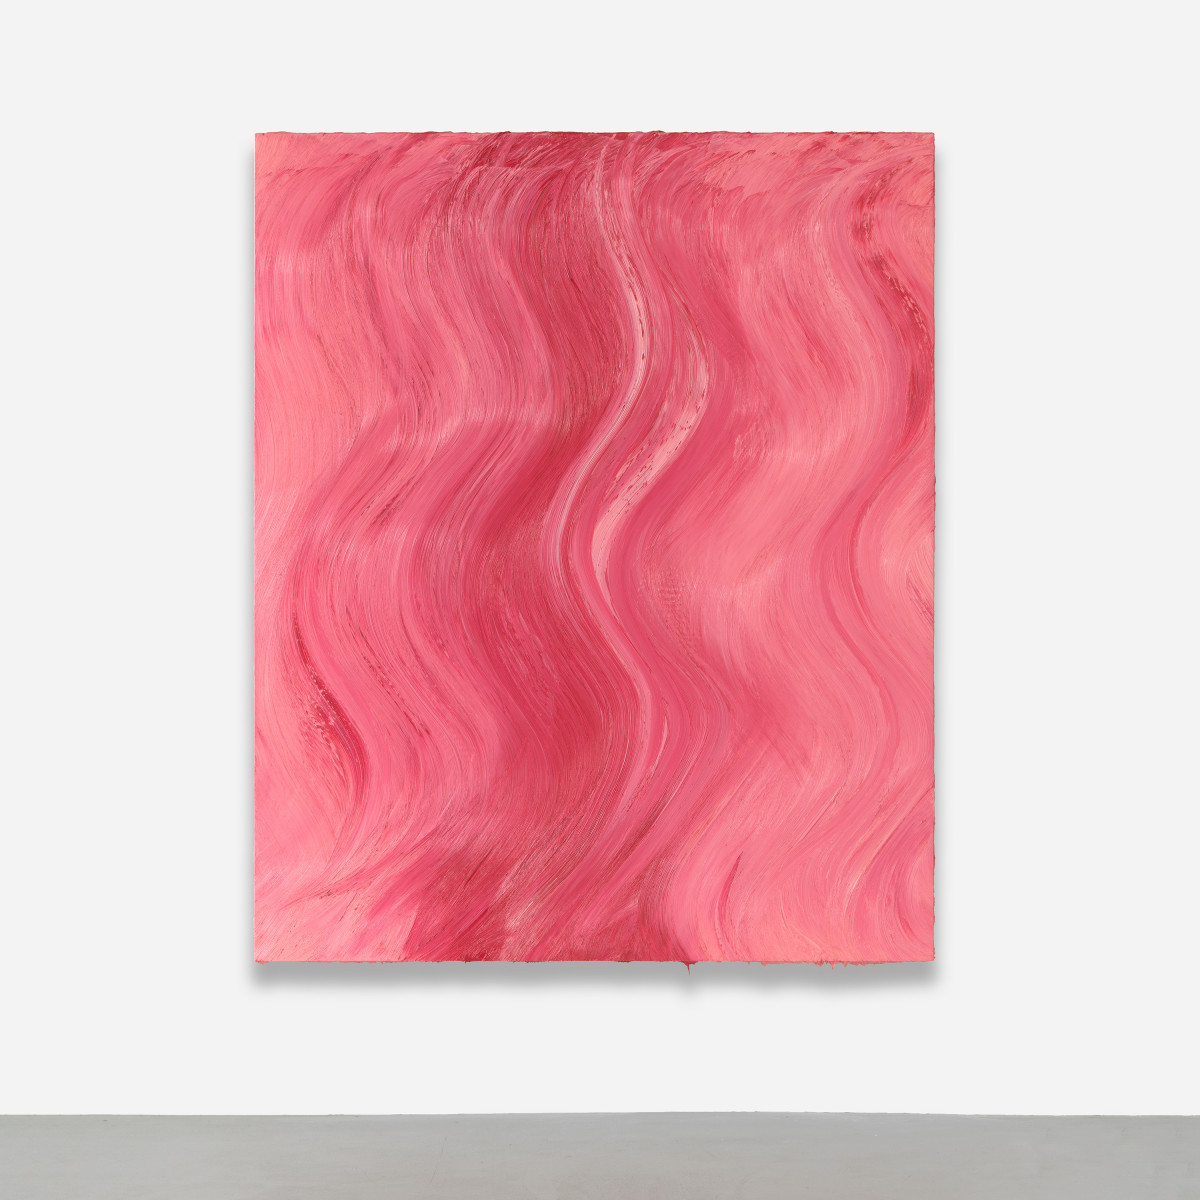 Jason Martin, ‘Untitled (Brilliant pink / Mixed white)’, 2020